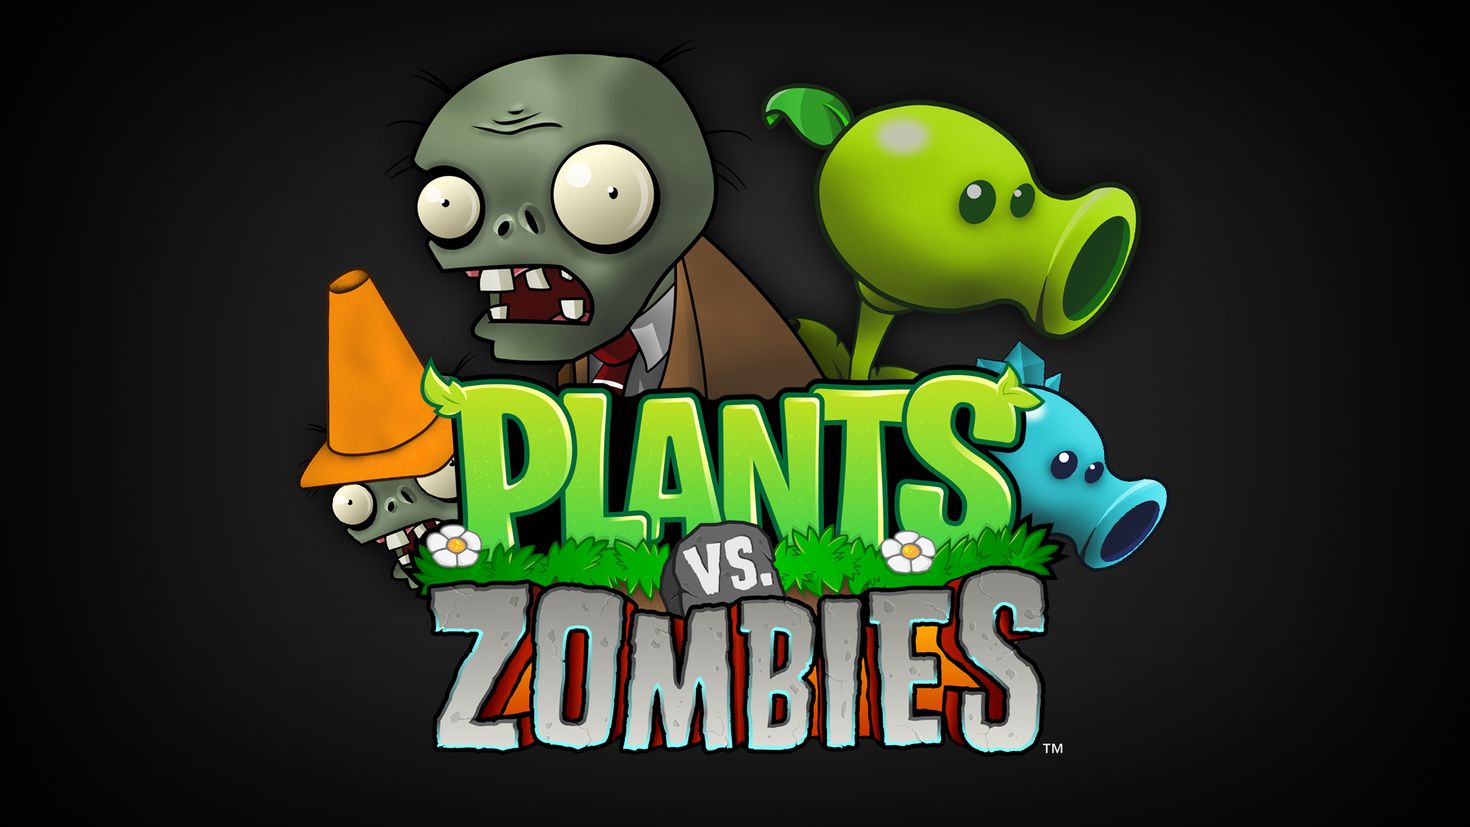 Мега зомби против. Растения против зомби 2 Постер. Plants vs. Zombies игры. Растения против зомби обложка. Растения против зомби 2 превью.